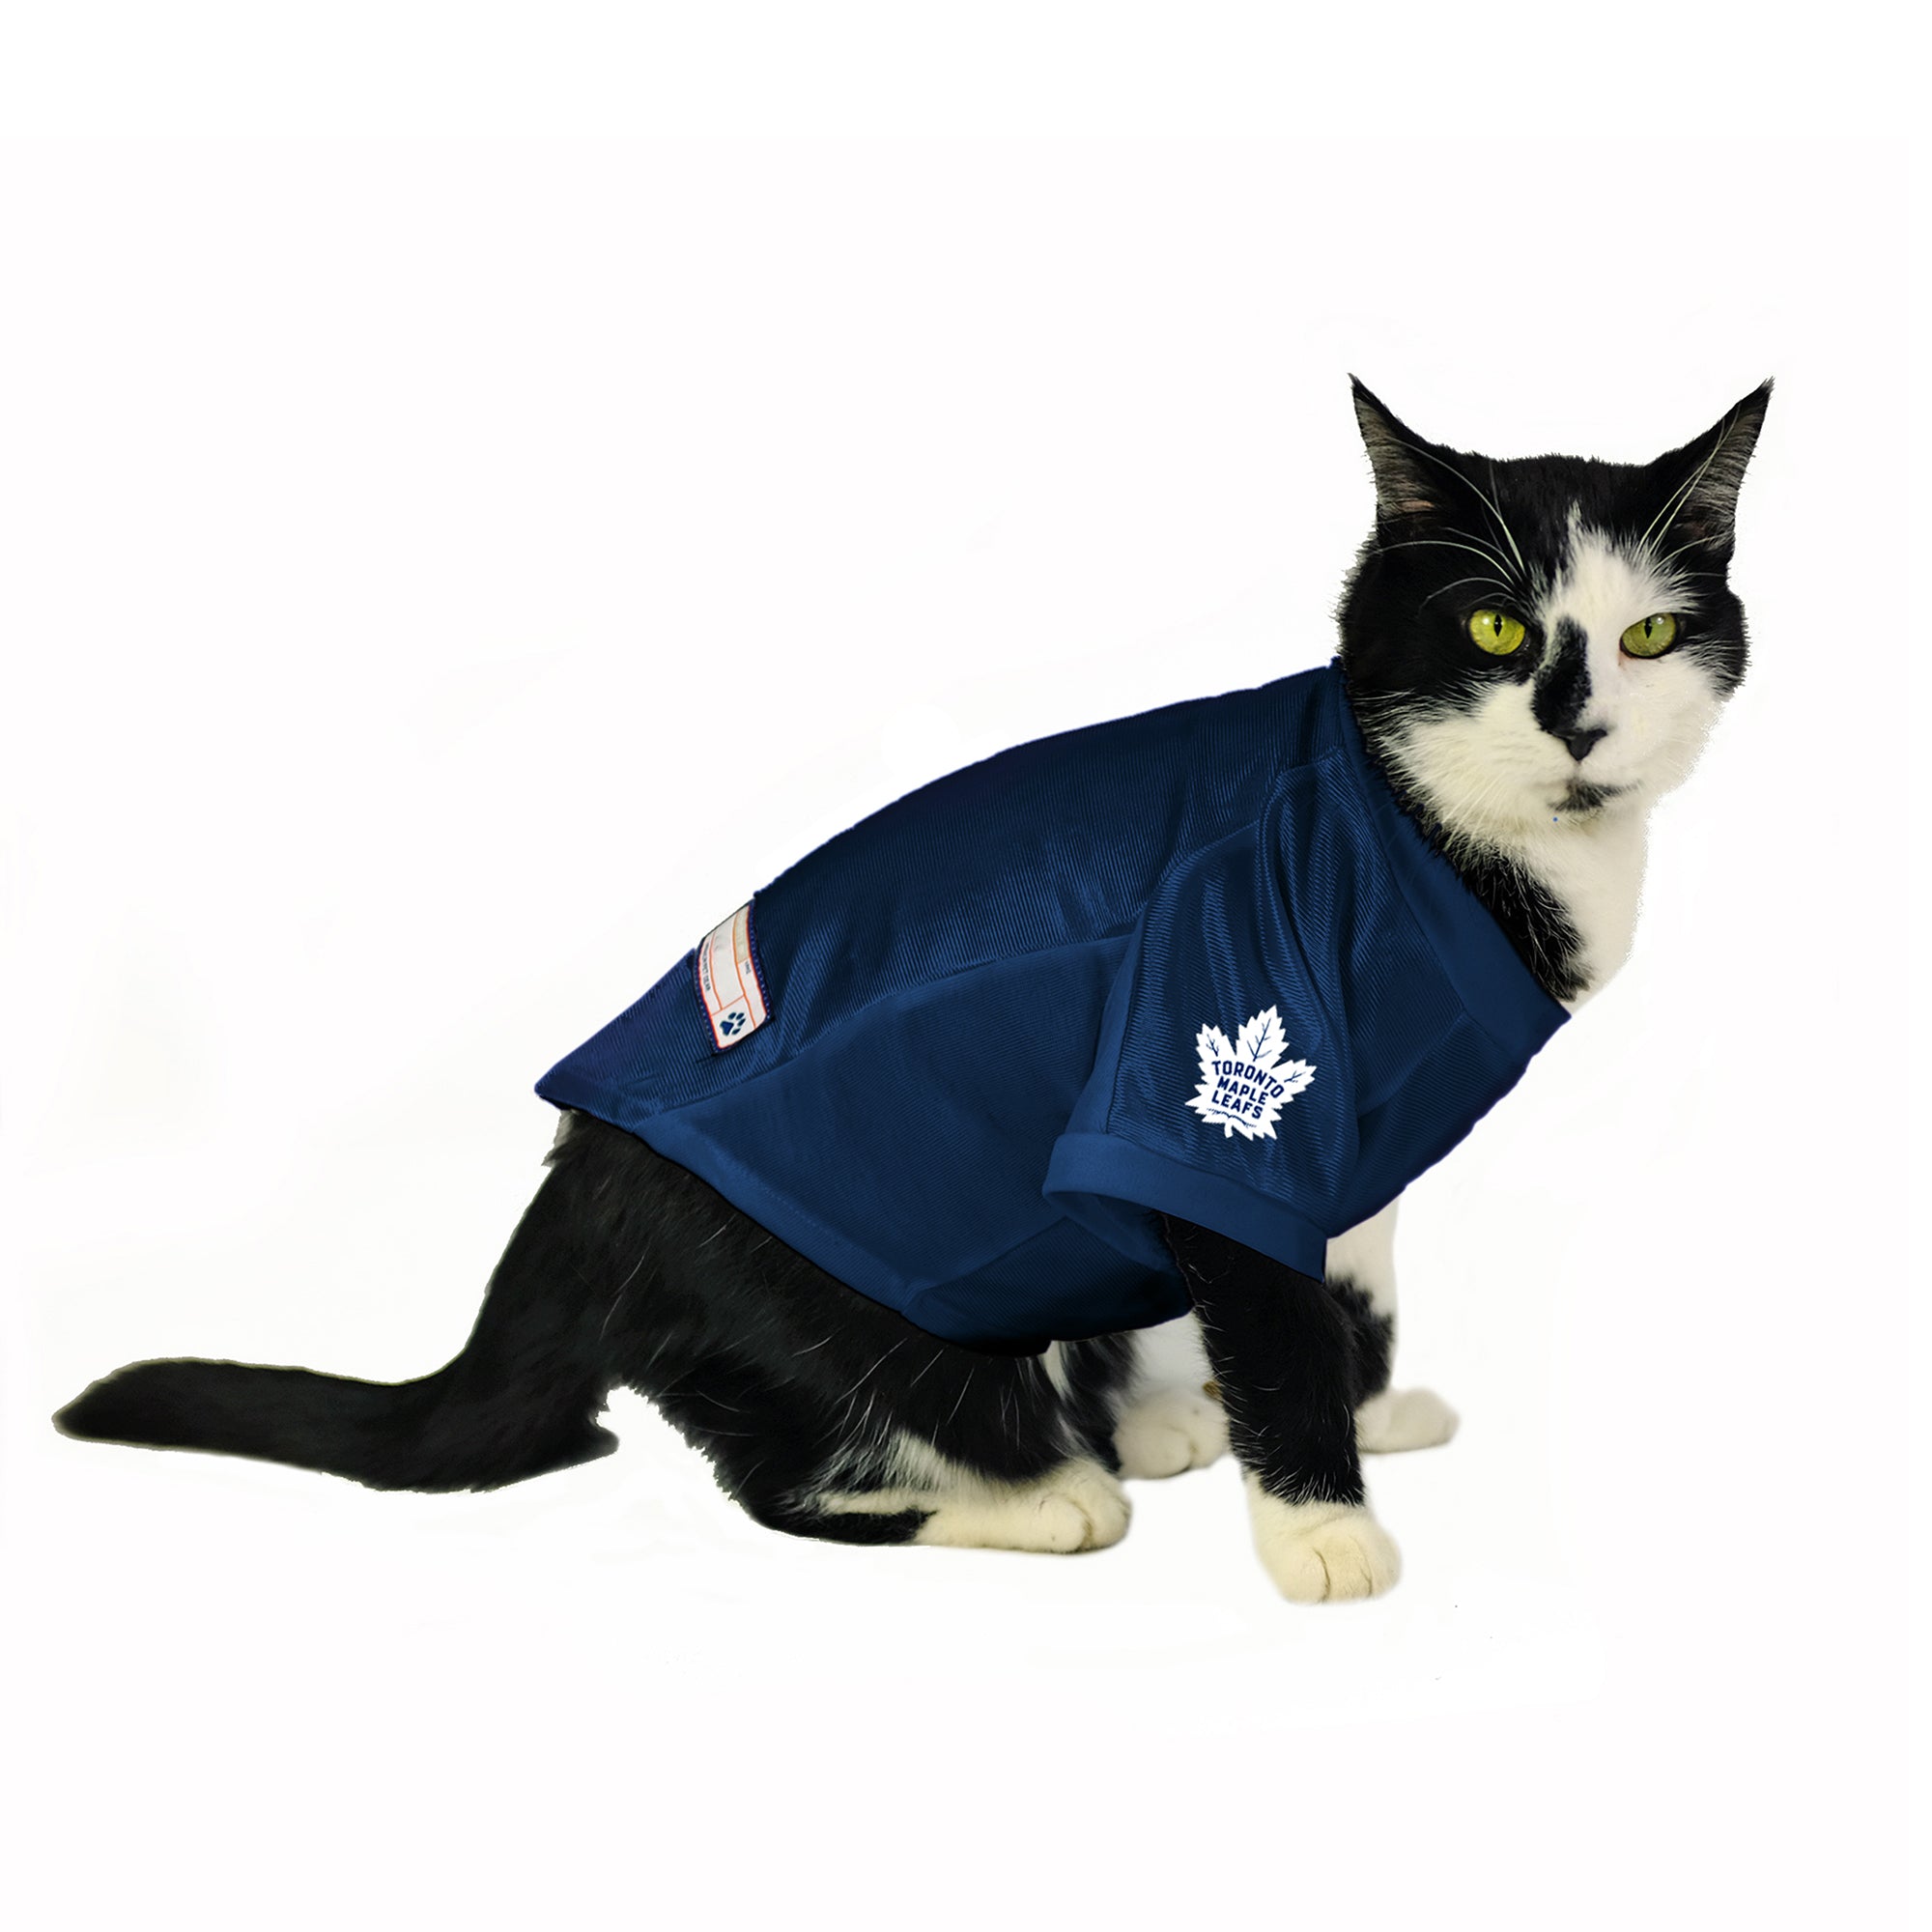 Pets First Toronto Maple Leafs Jersey | Size: Medium